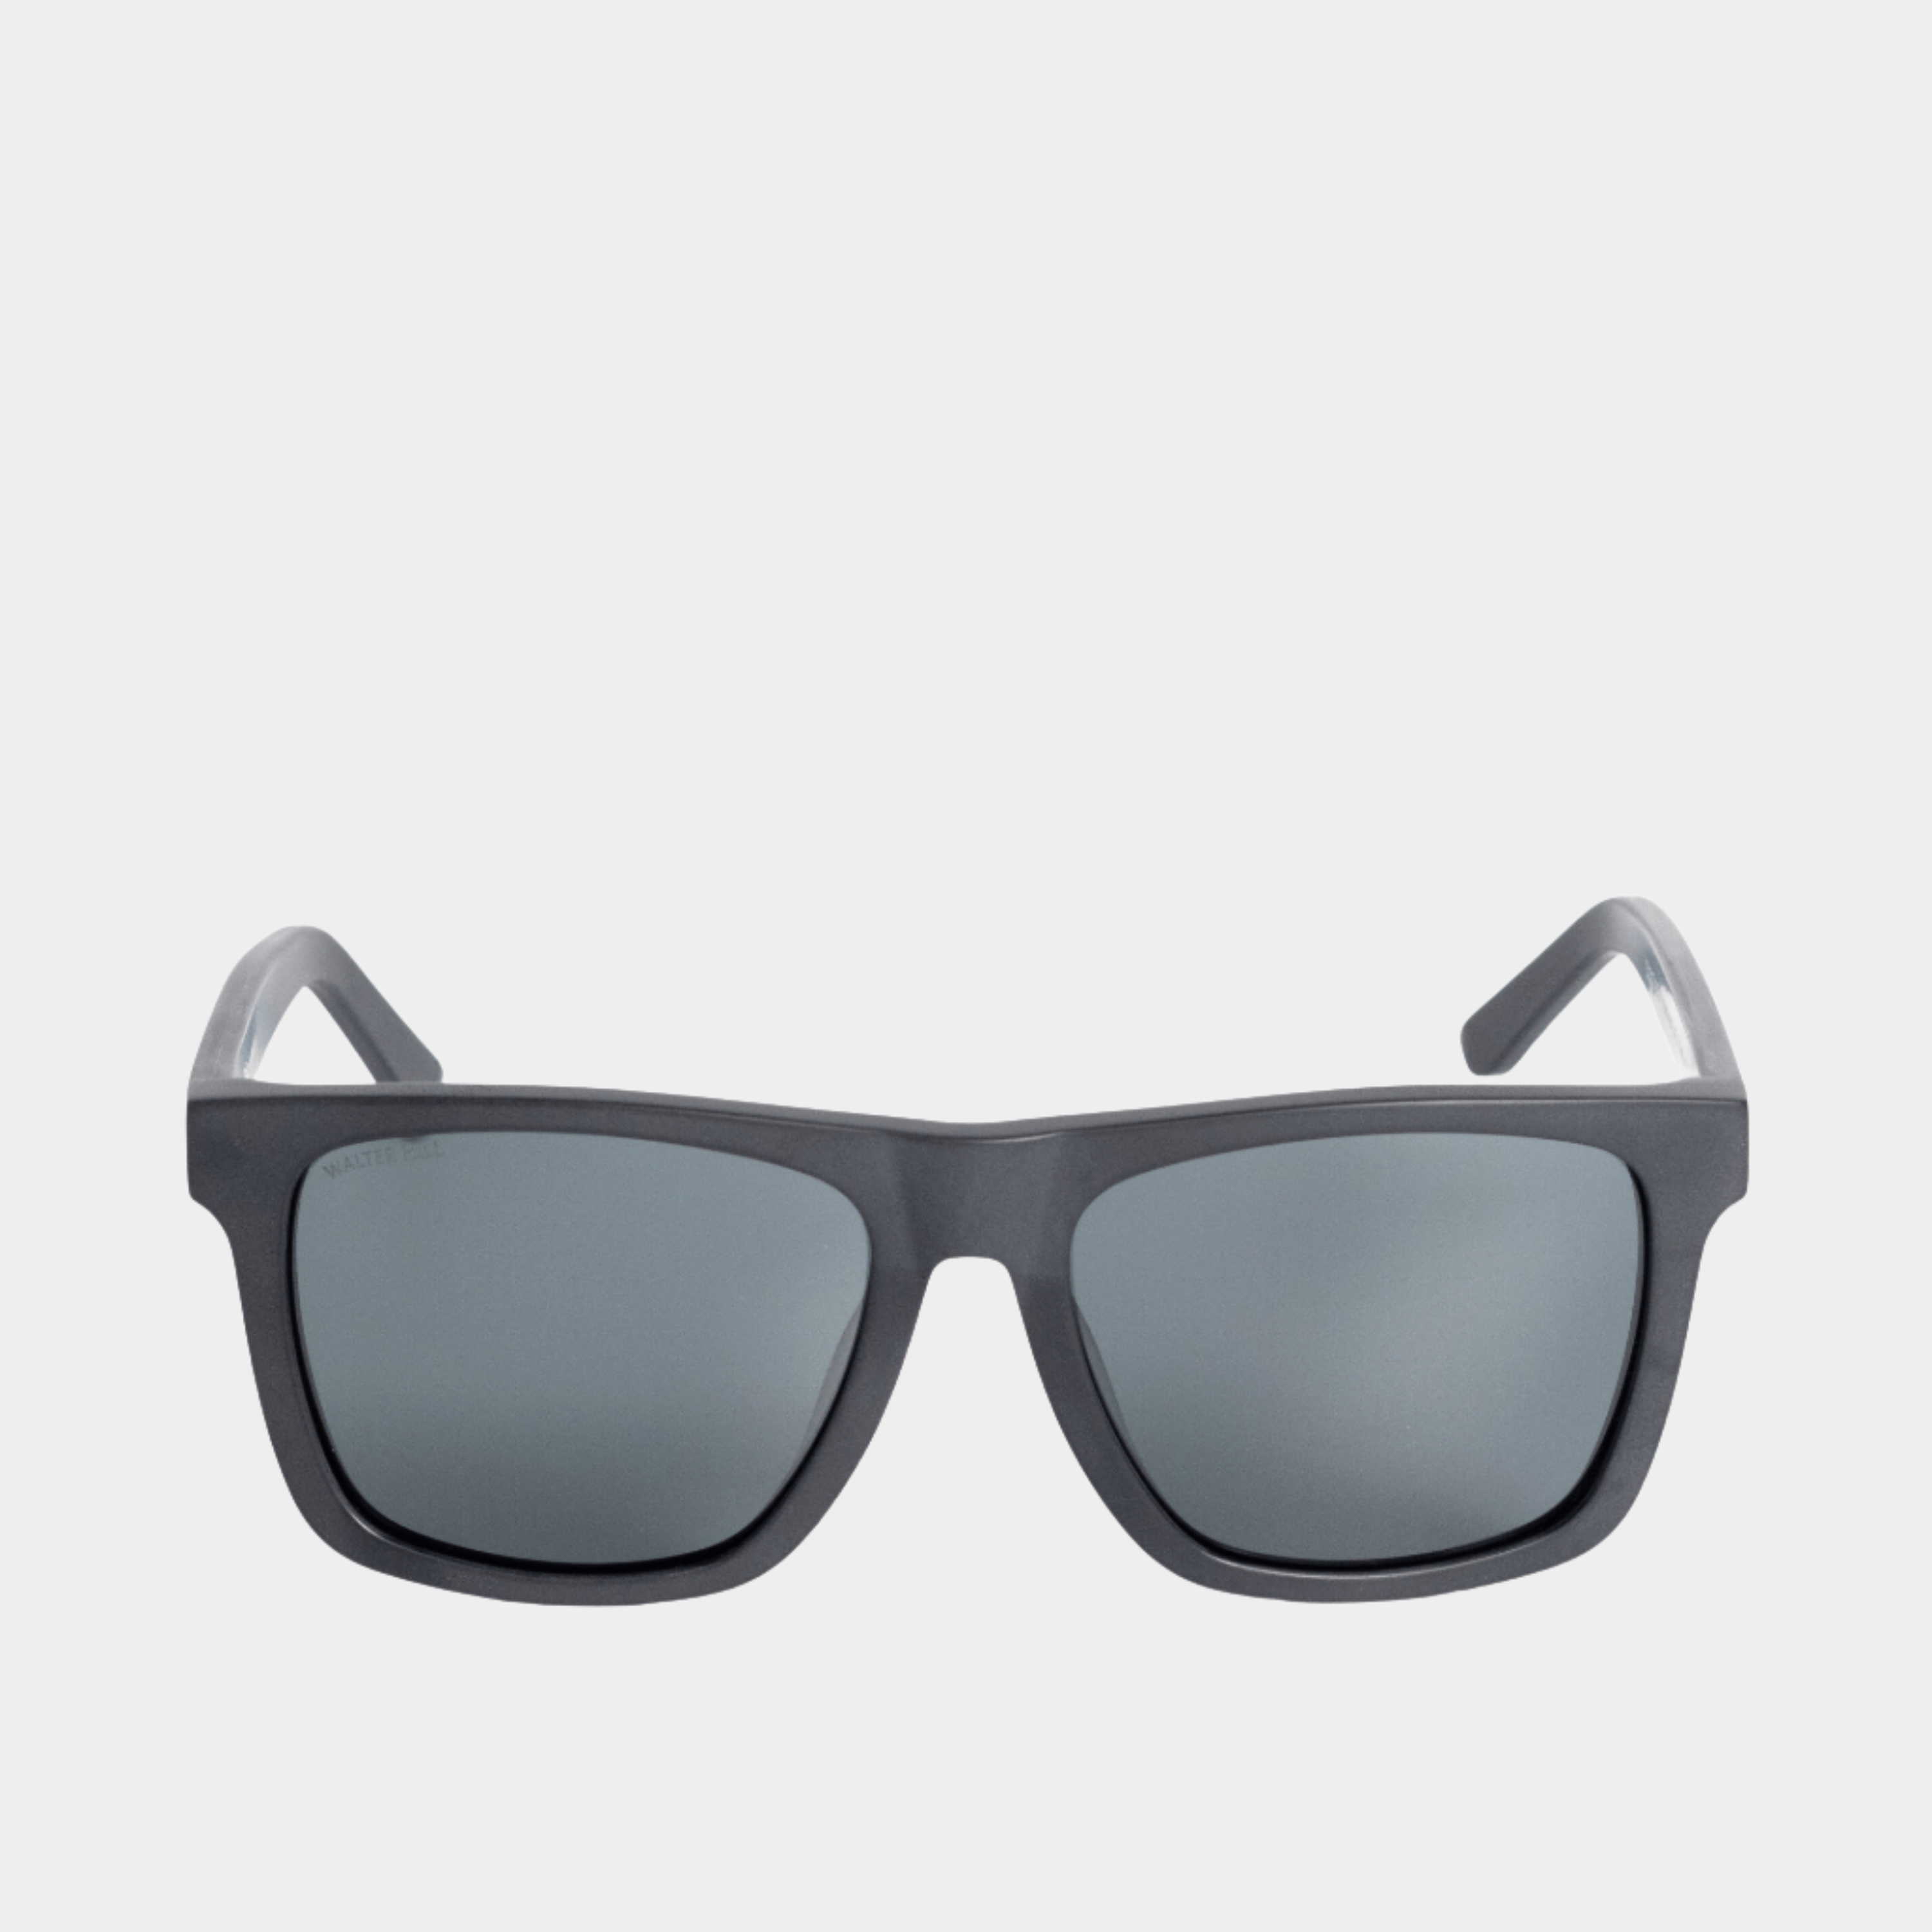 Walter Hill Sunglasses Oversized AALTO - Matte Black